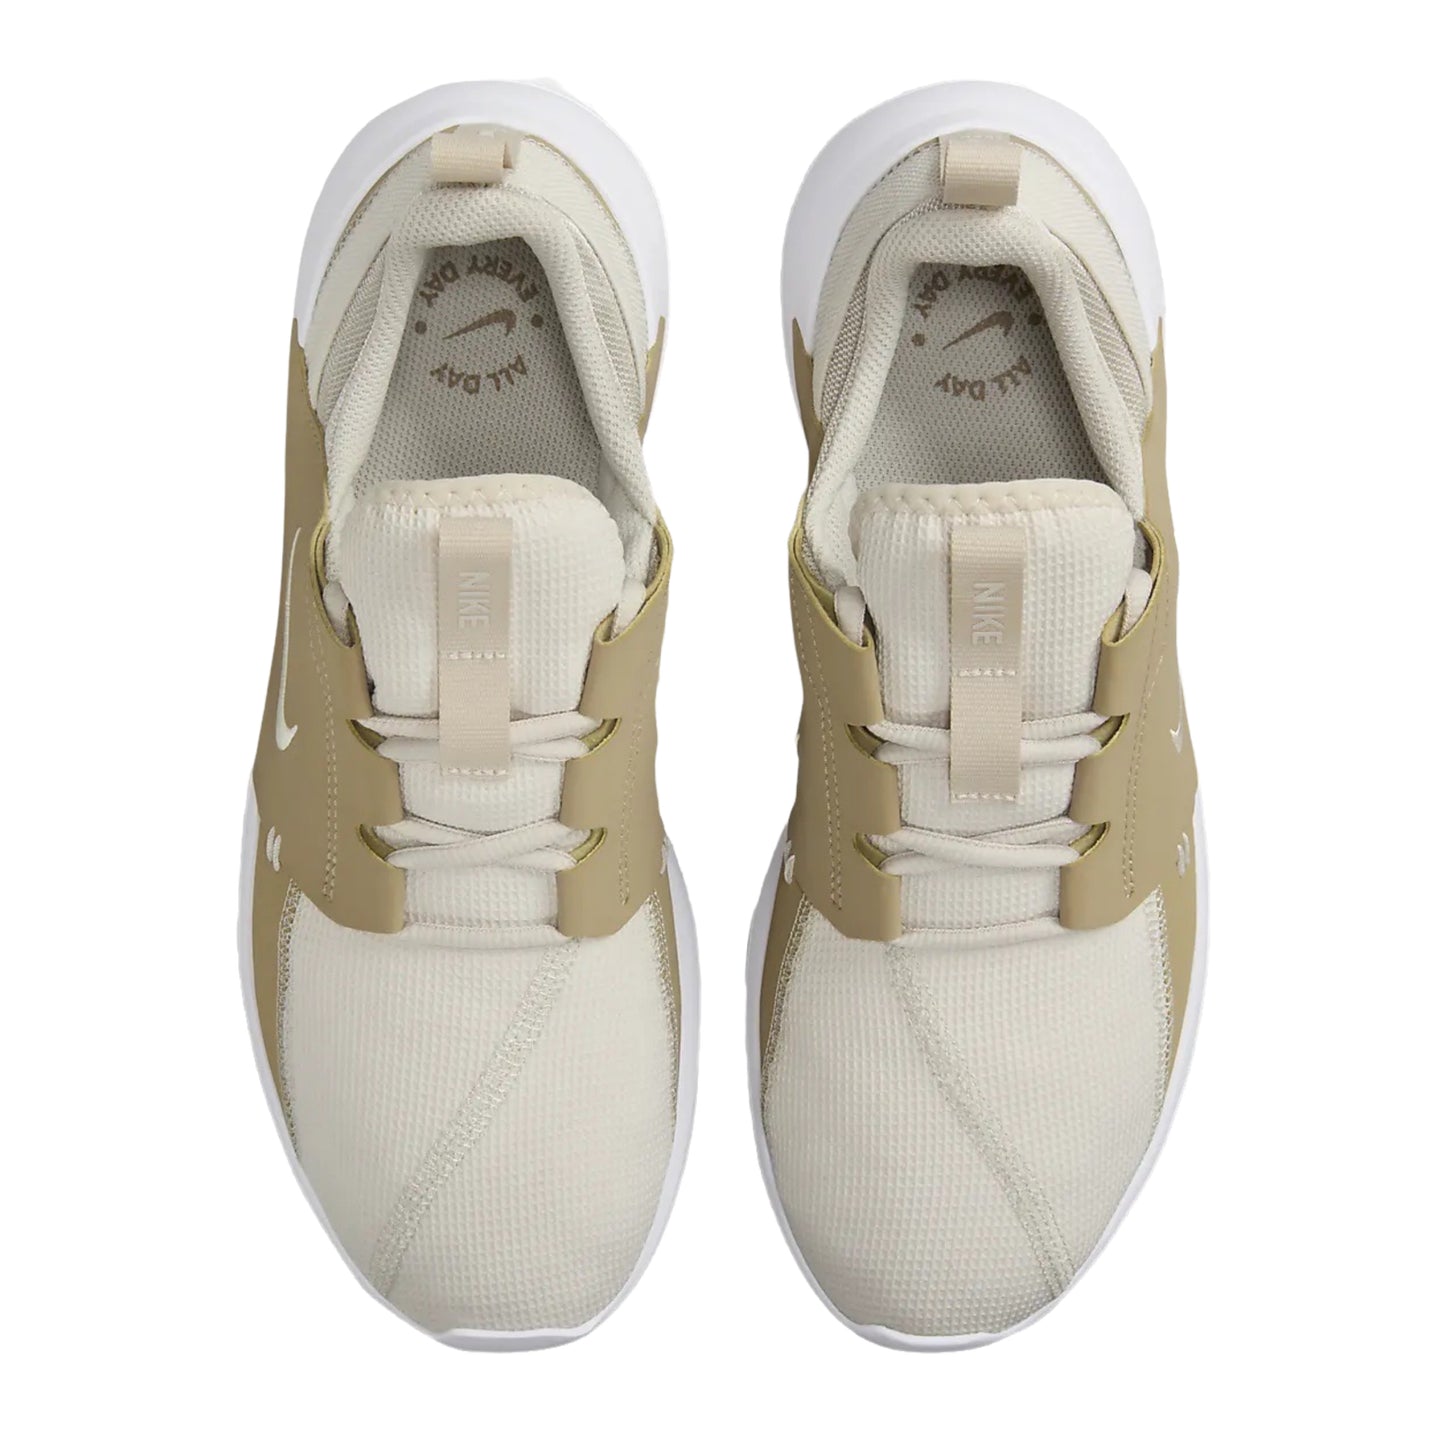 Nike E-Series AD Men's Shoes Brown